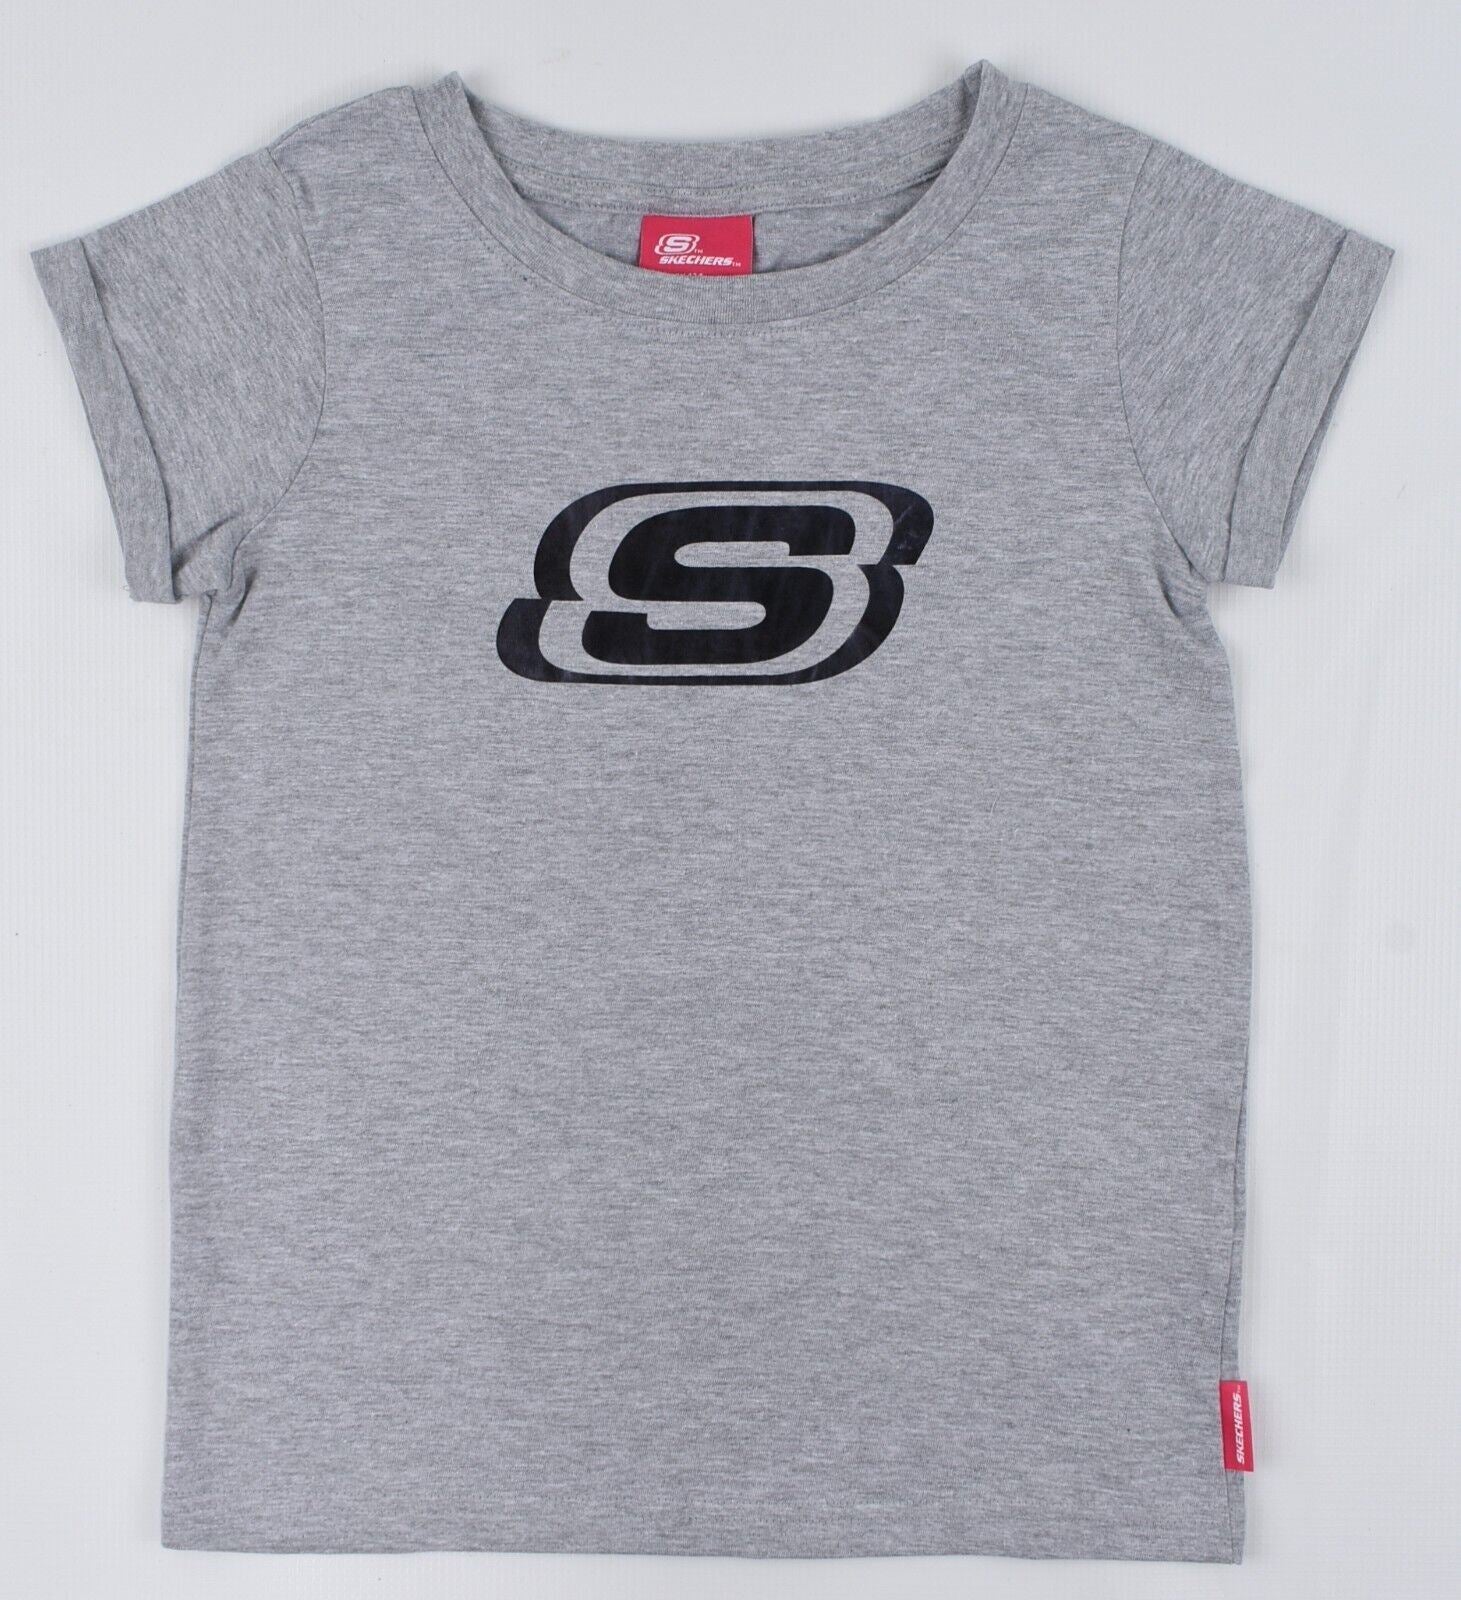 SKECHERS Girls' Kids' Crew Neck Logo T-shirt, Grey/Black Logo, size 11 years